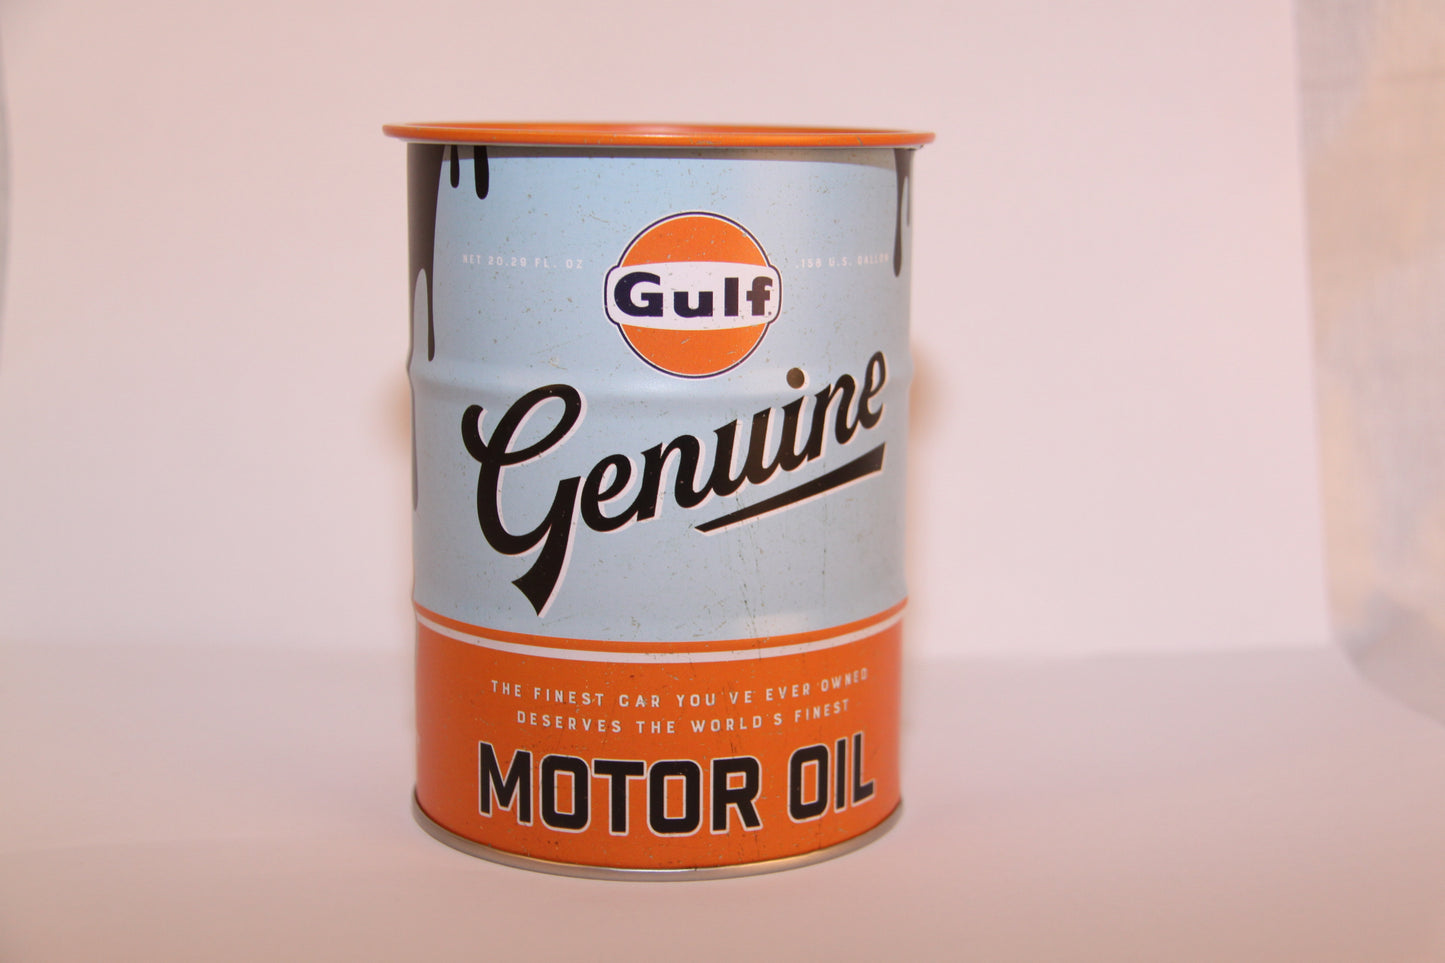 Spardose "Gulf Genuine Motor Oil"